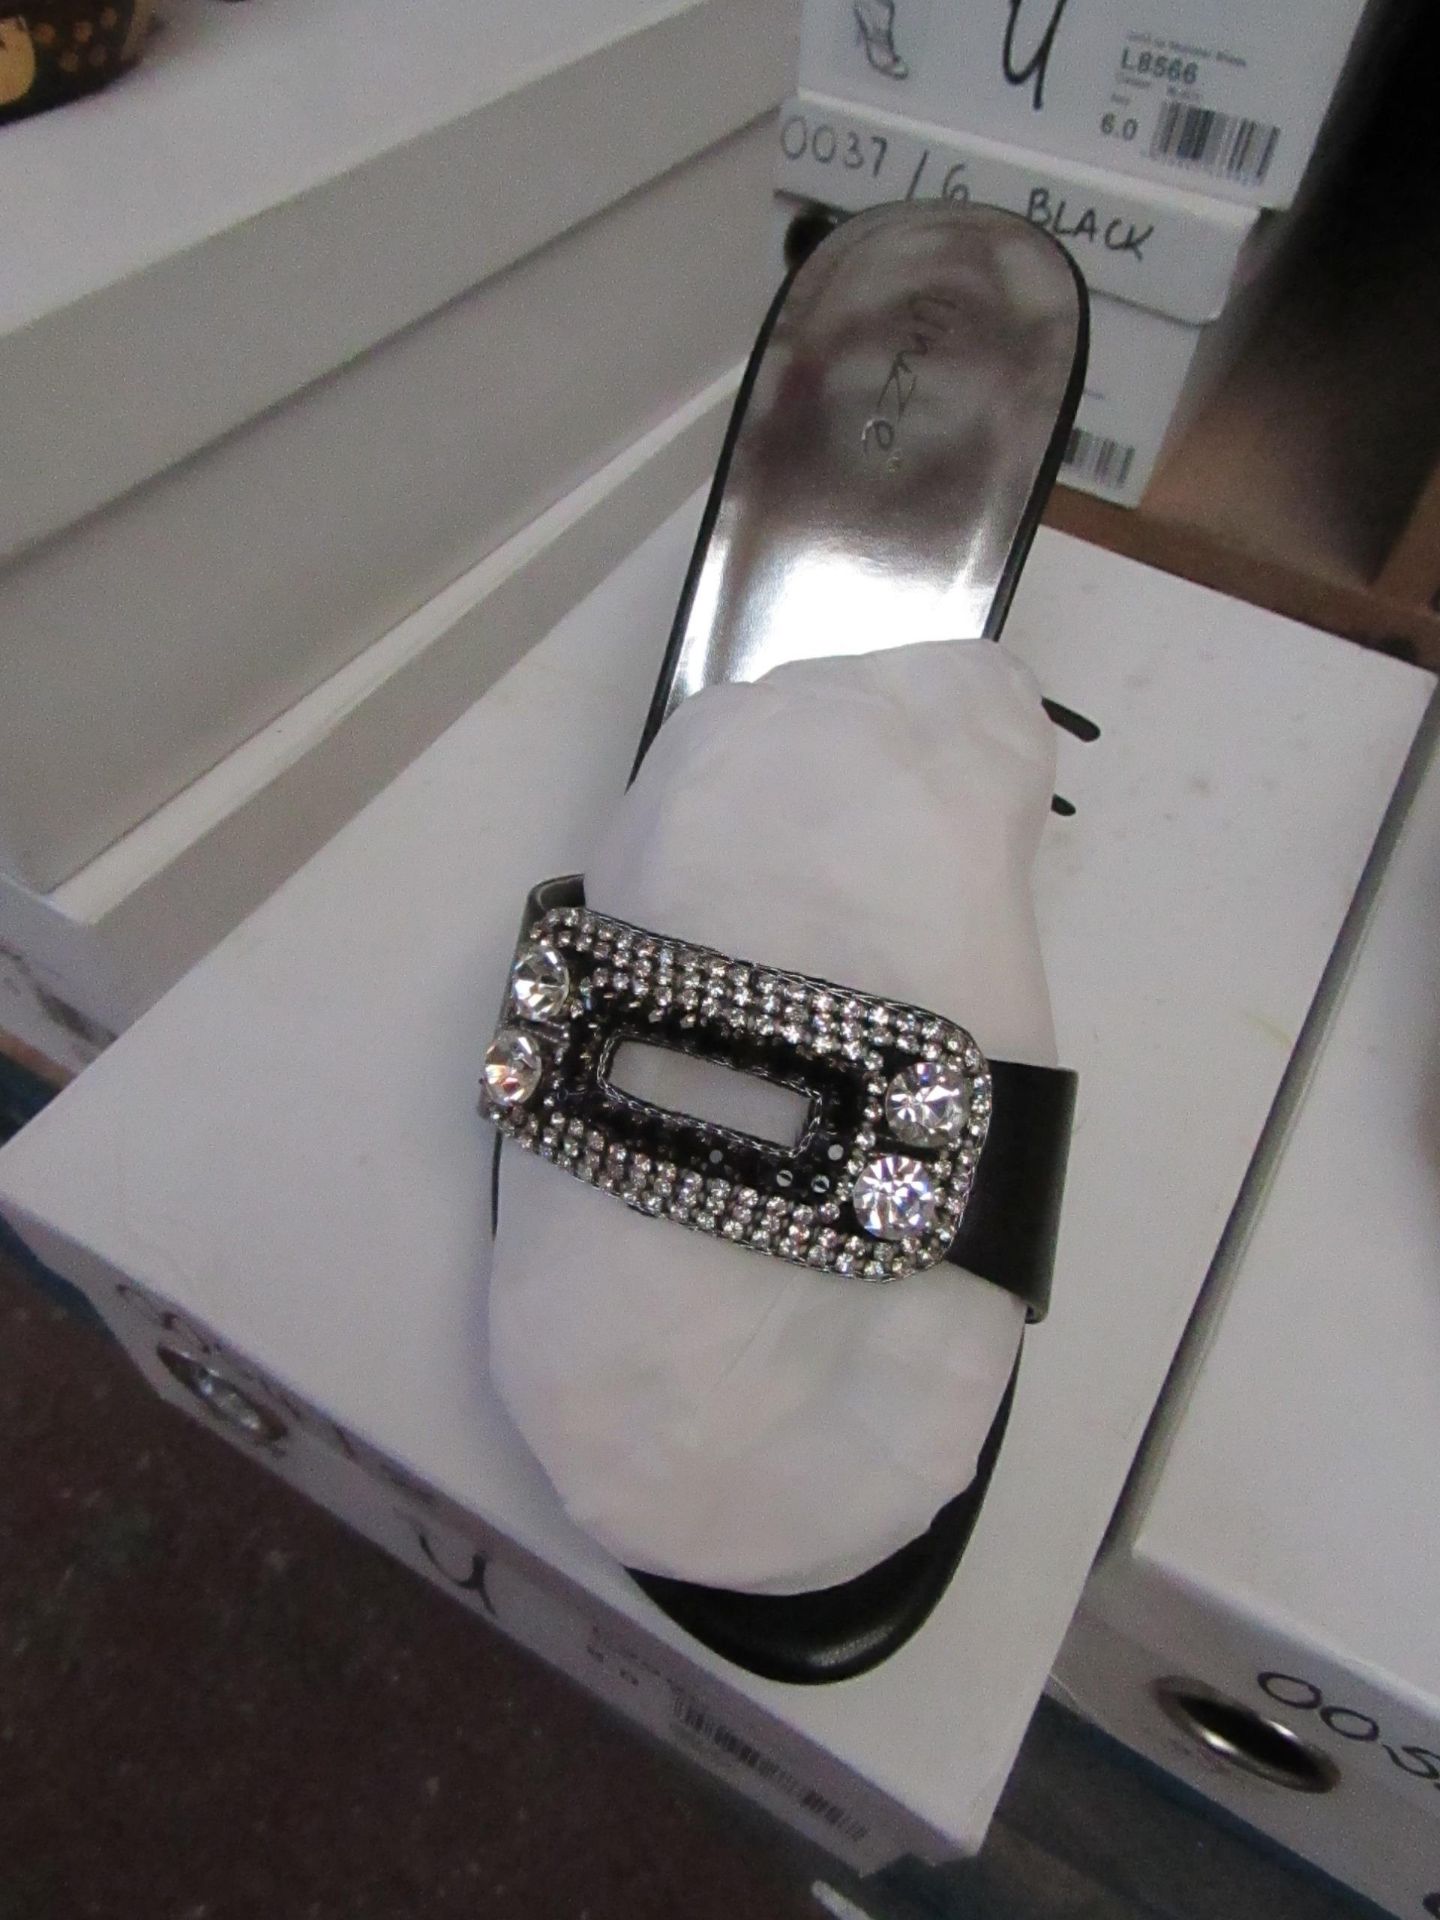 Unze by Shalamar Shoes Ladies Black & Diamante Shoes size 5 new & boxed see image for design